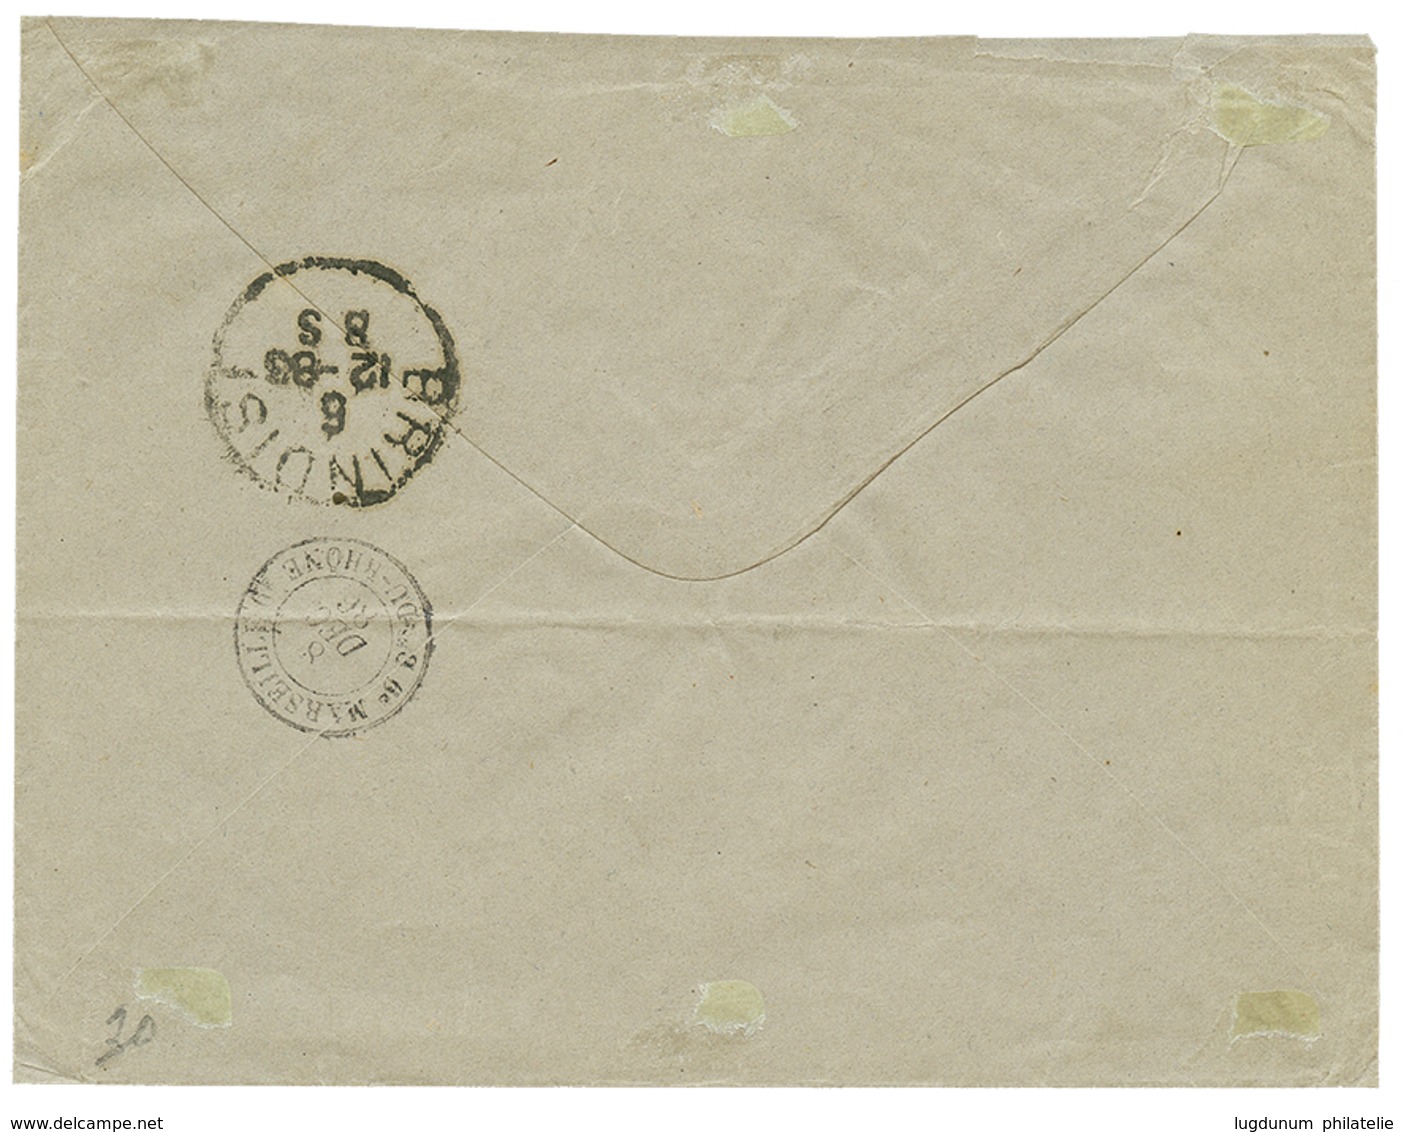 941 "CANEA" : 1886 10 Soldi Canc. CANEA On Envelope To FRANCE. Vvf. - Eastern Austria